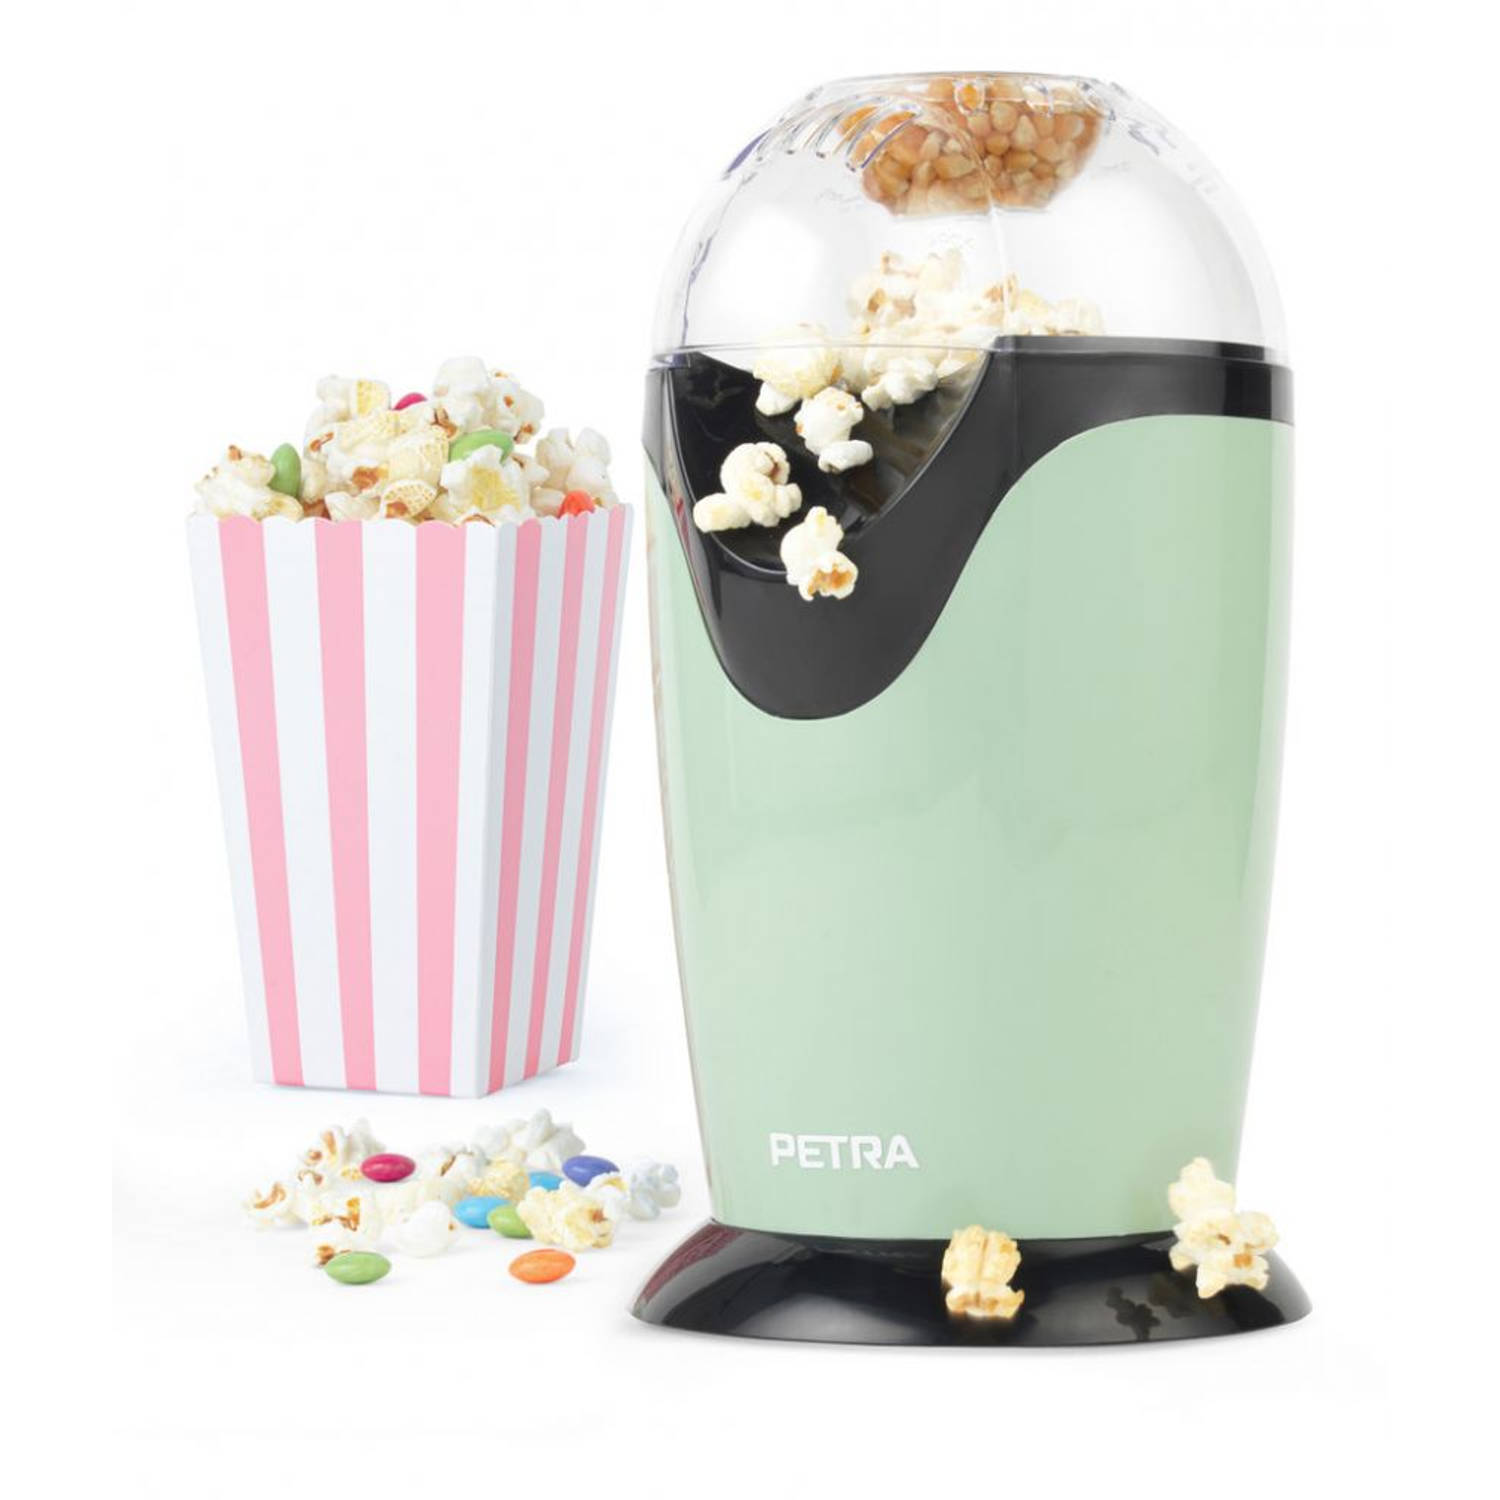 Petra Retro Popcornmachine Inclusief Maatbeker Popcorn Zonder Olie Of Boter 1200w